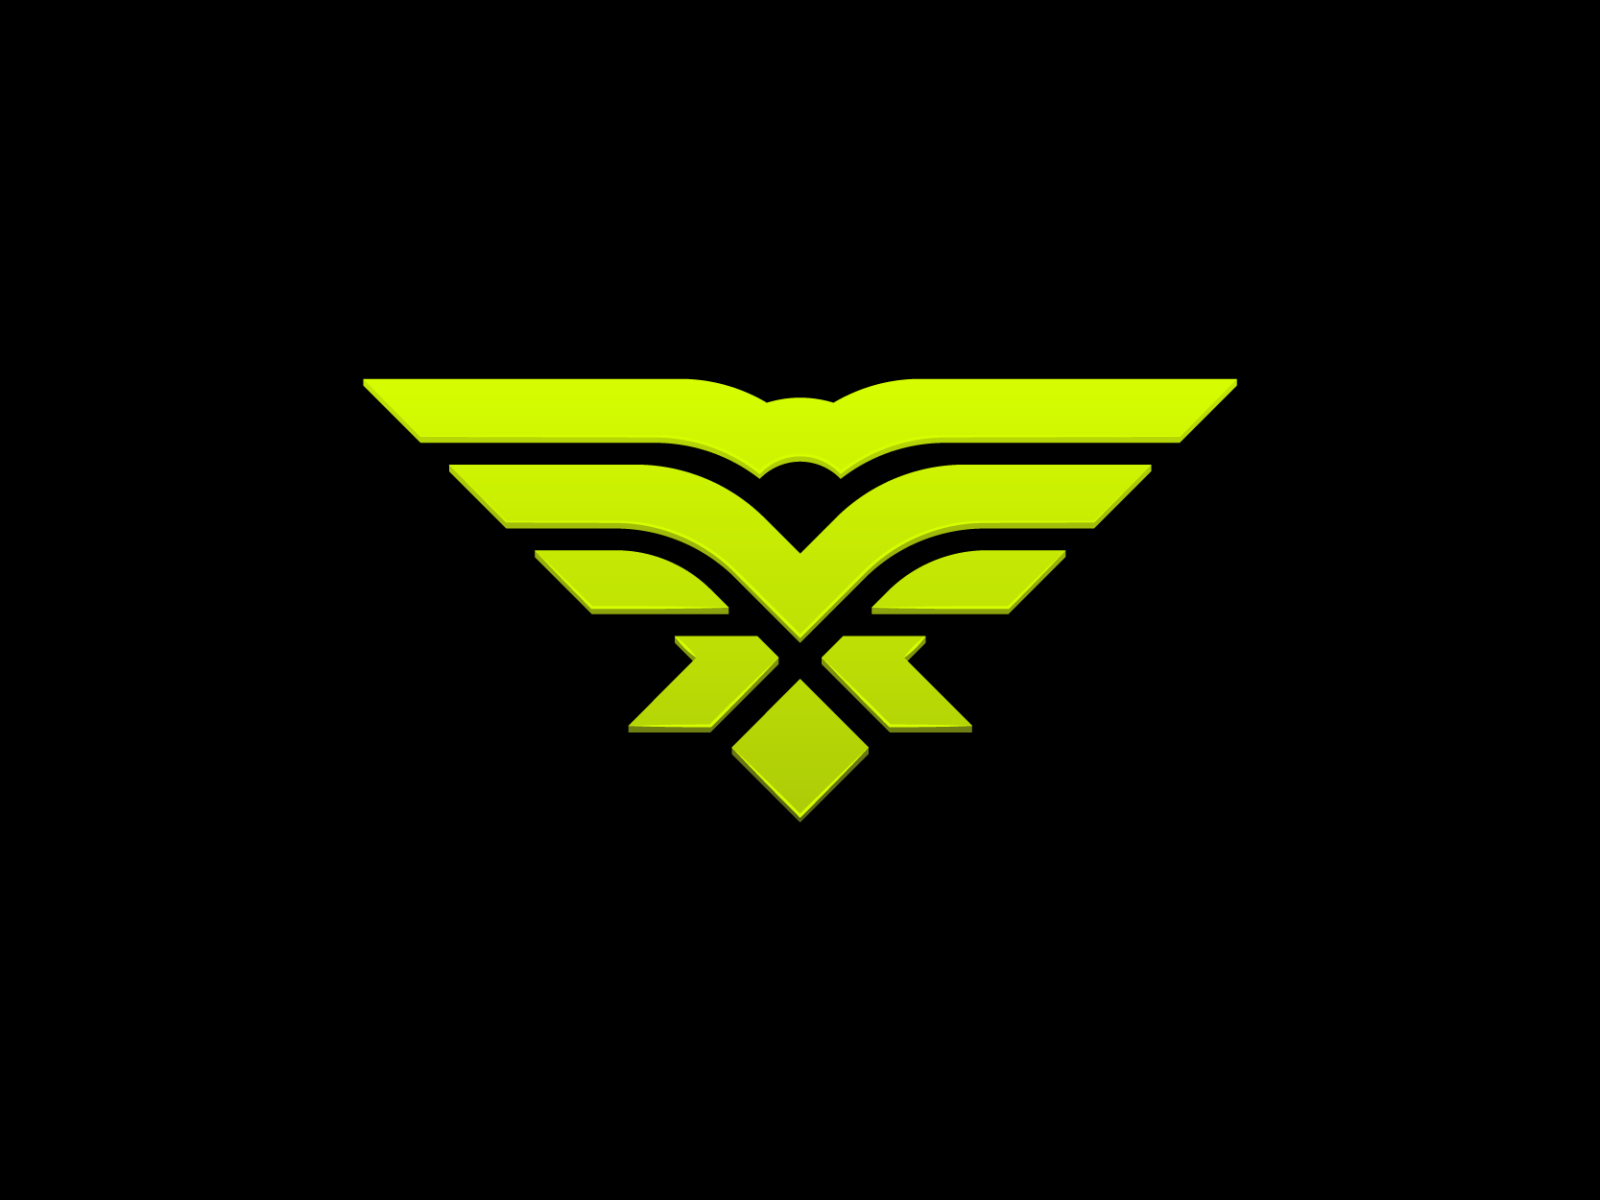 Eagle Logo by El Chivo Negro on Dribbble